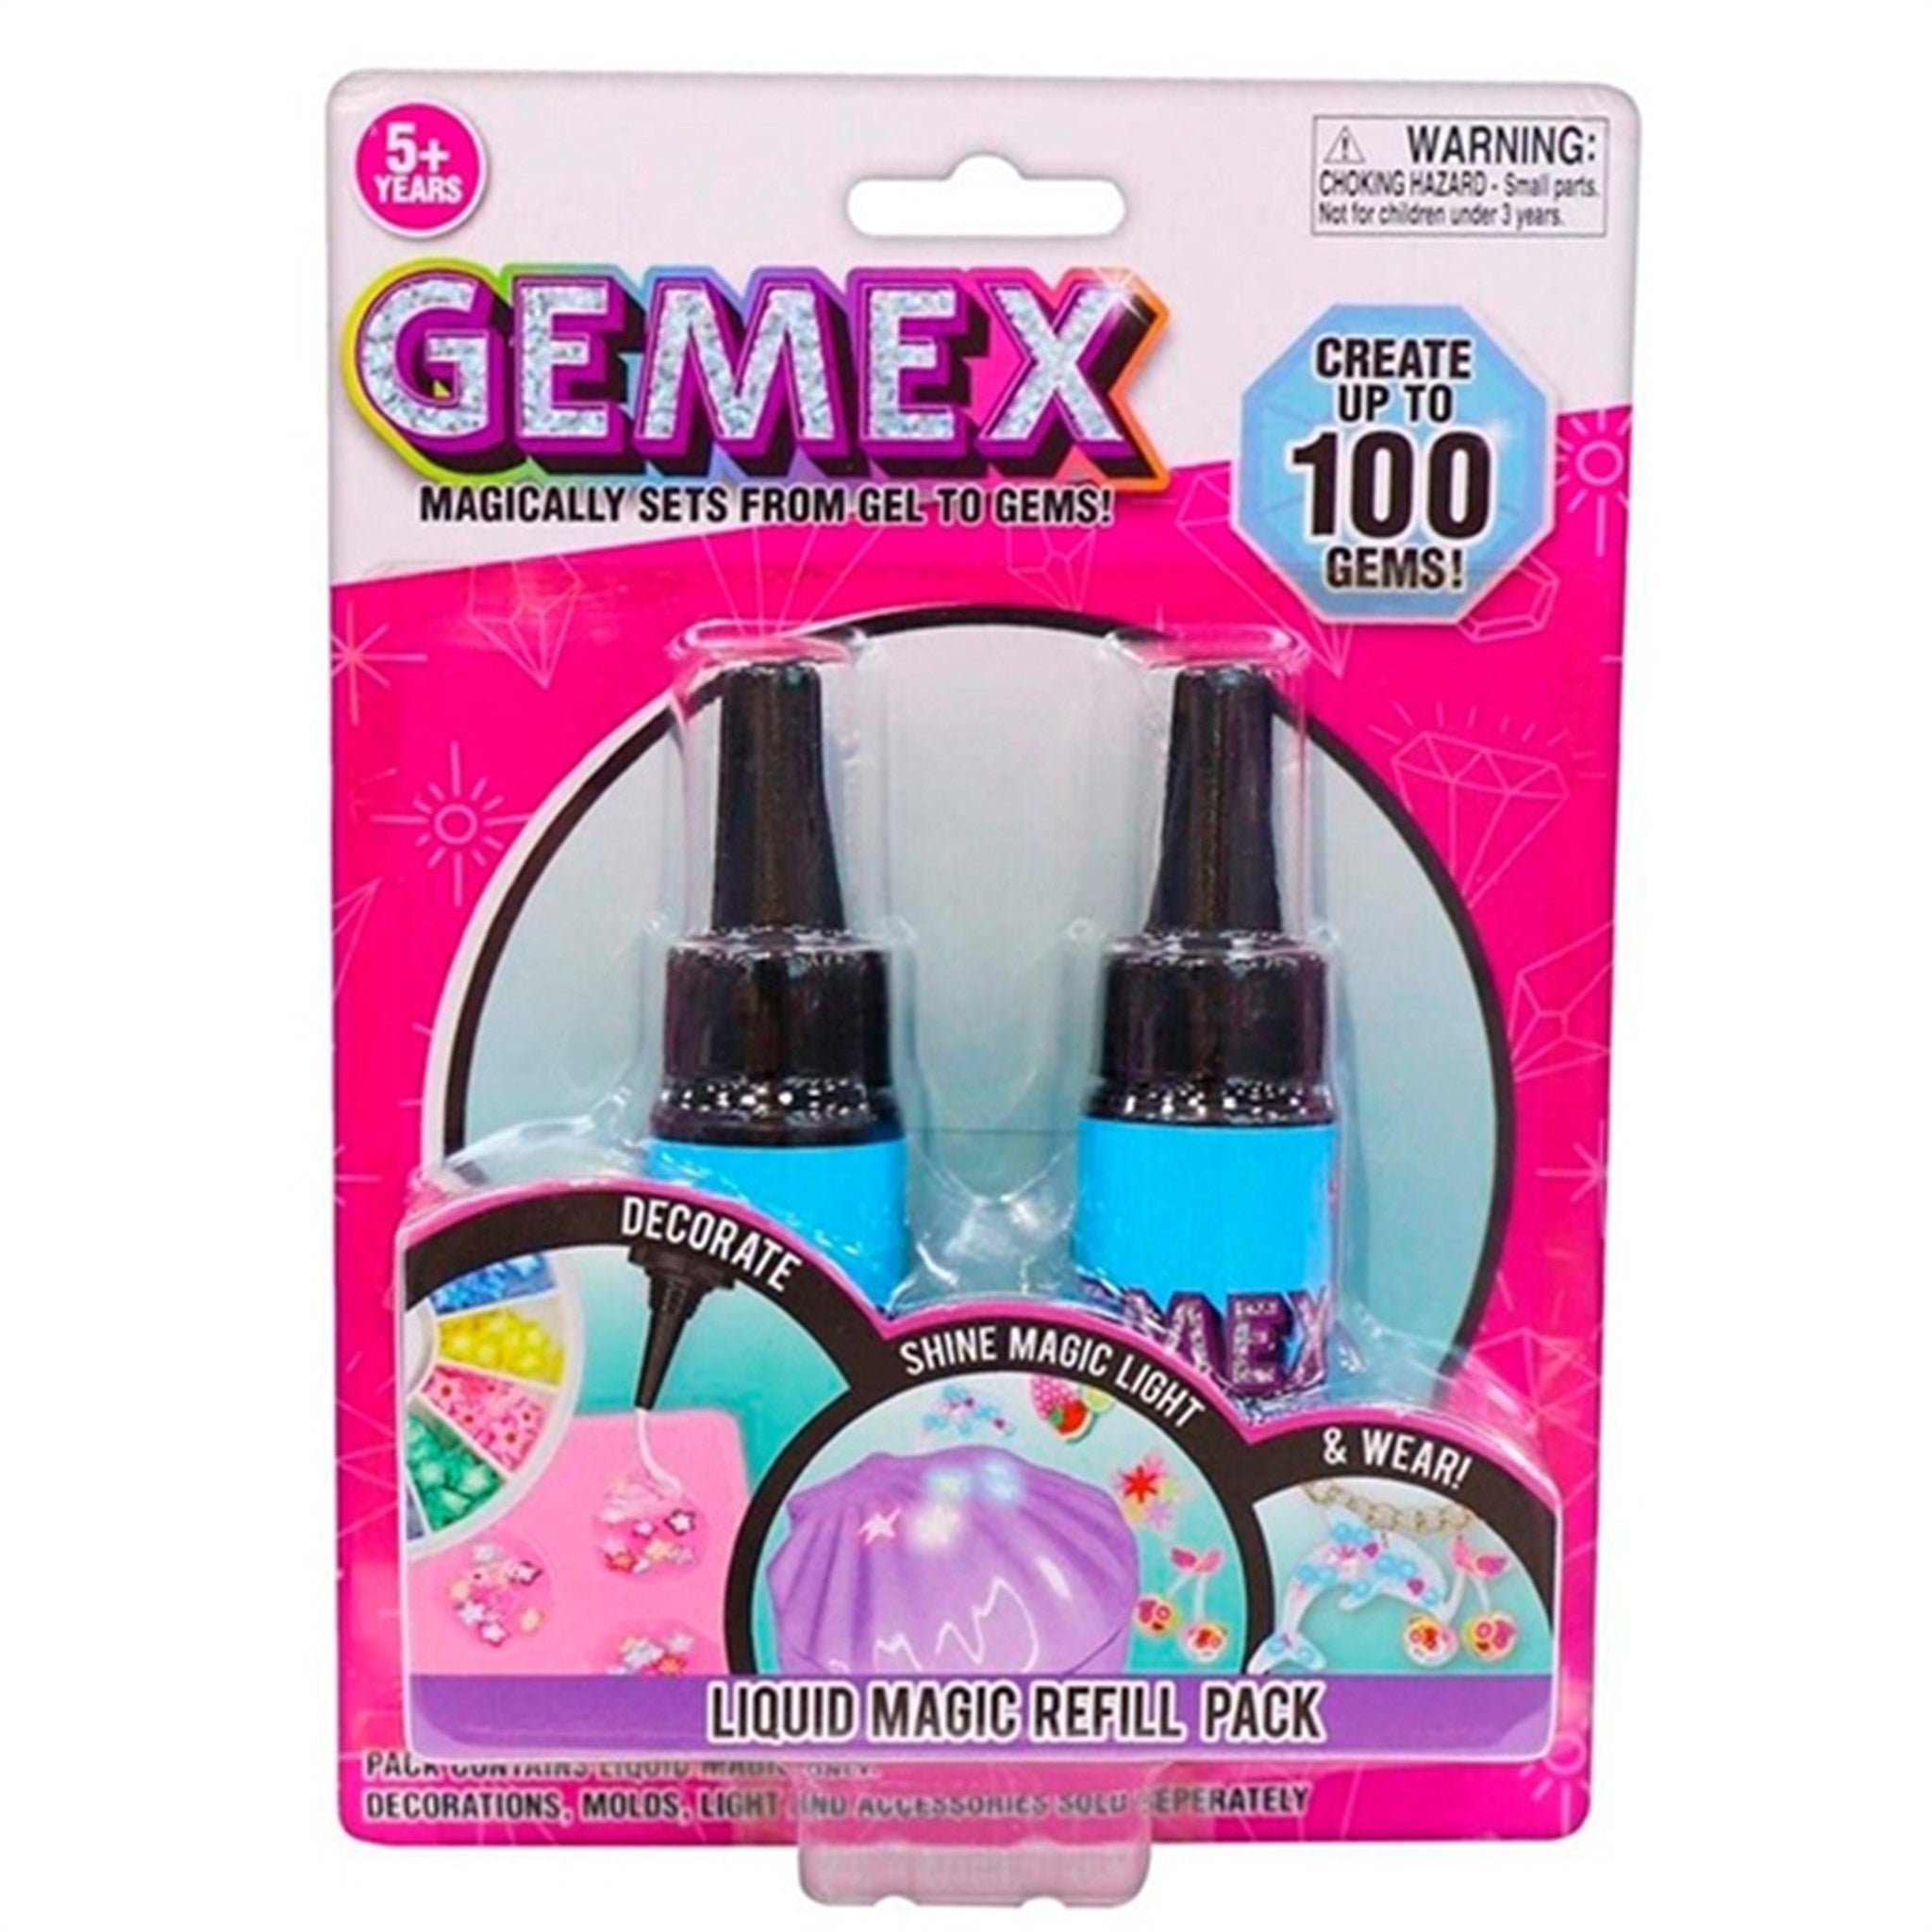 Gemex Liquid Magic Refill Pack